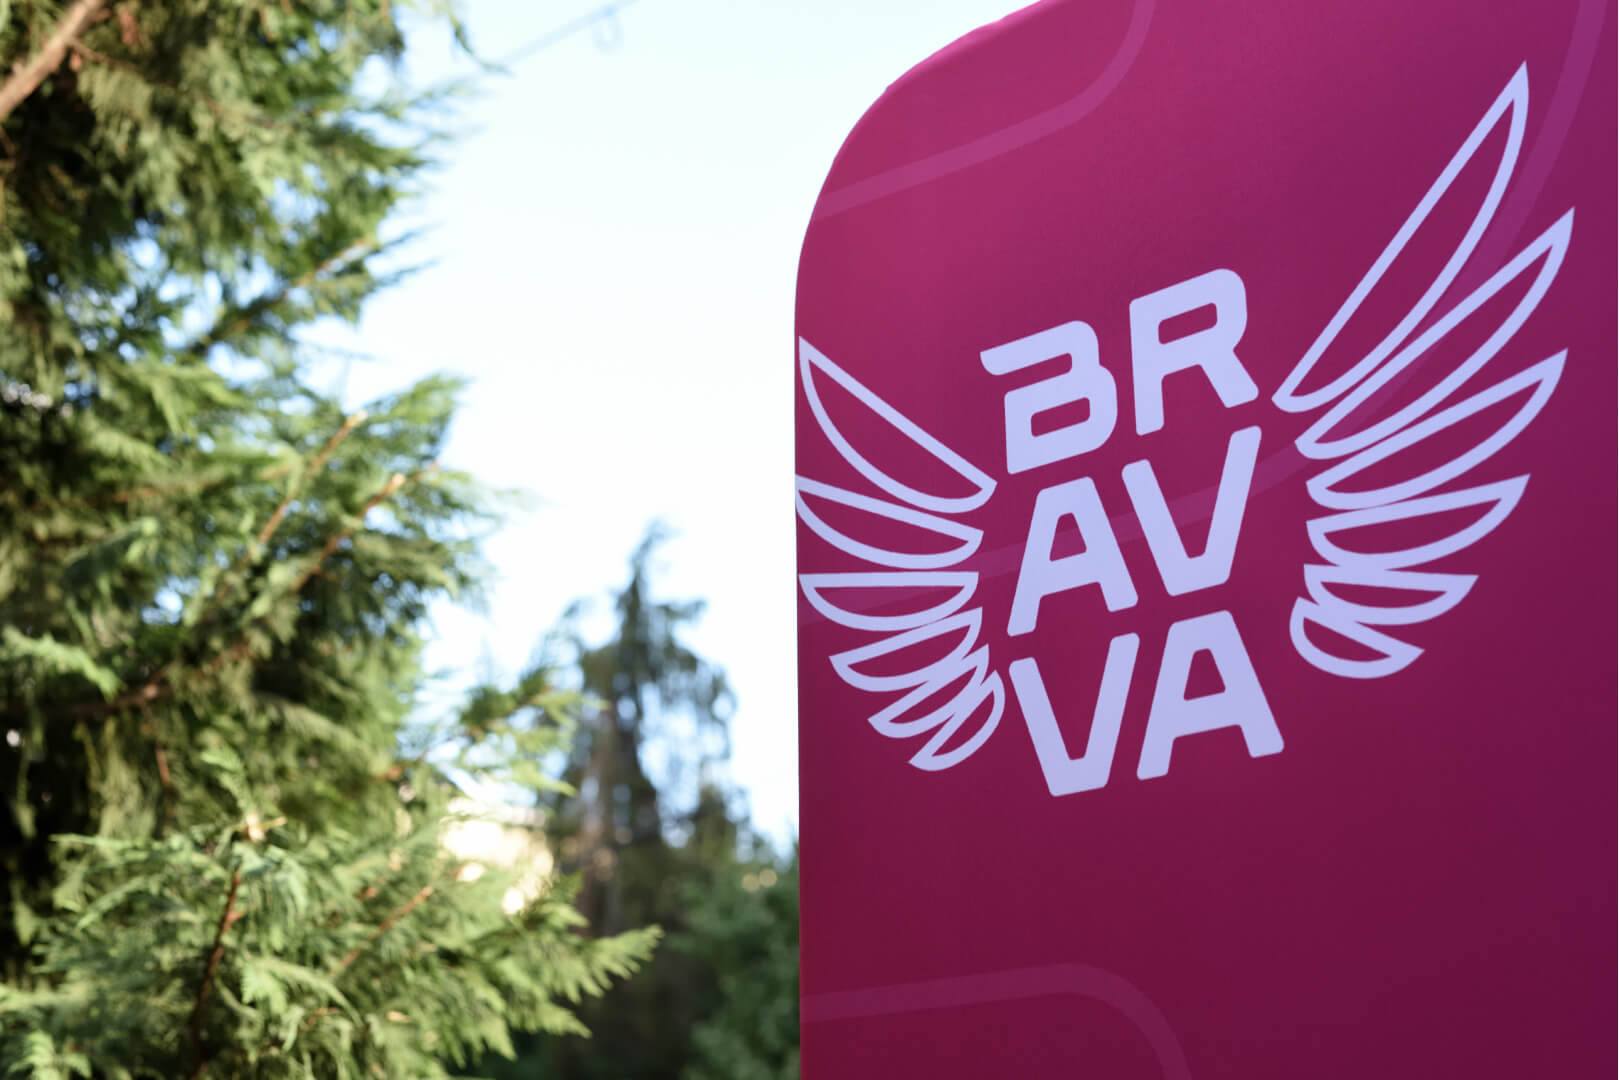 Membership Bravva – Let’s create a movement!